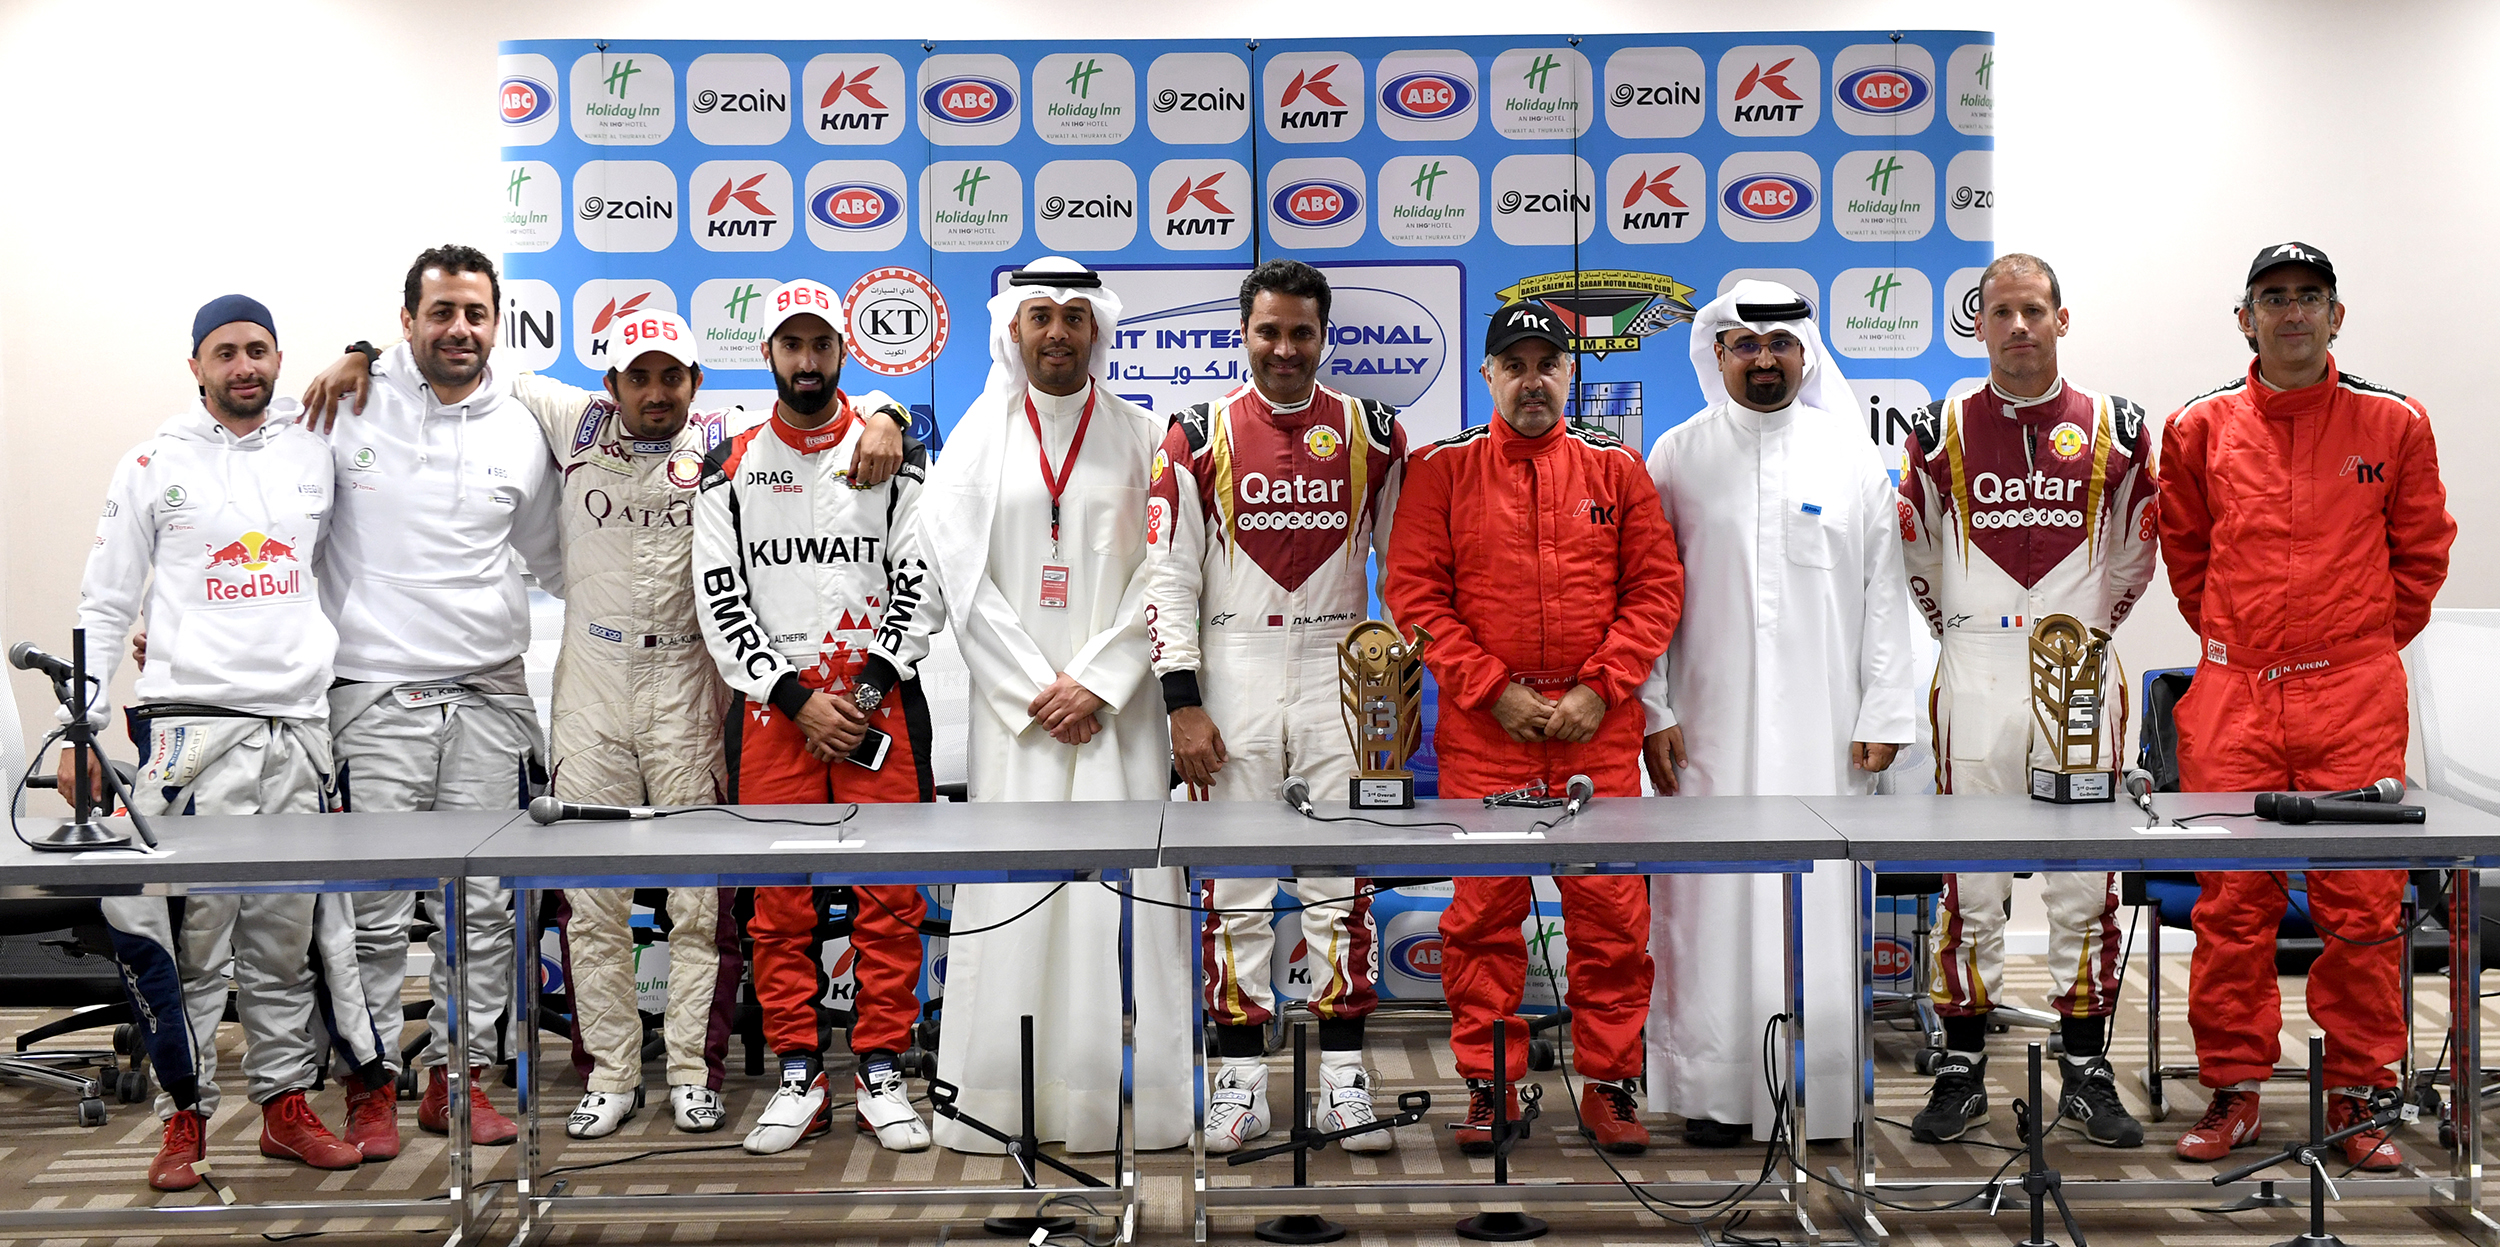 Zain participates in awarding winners of Kuwait International Rally 2018  